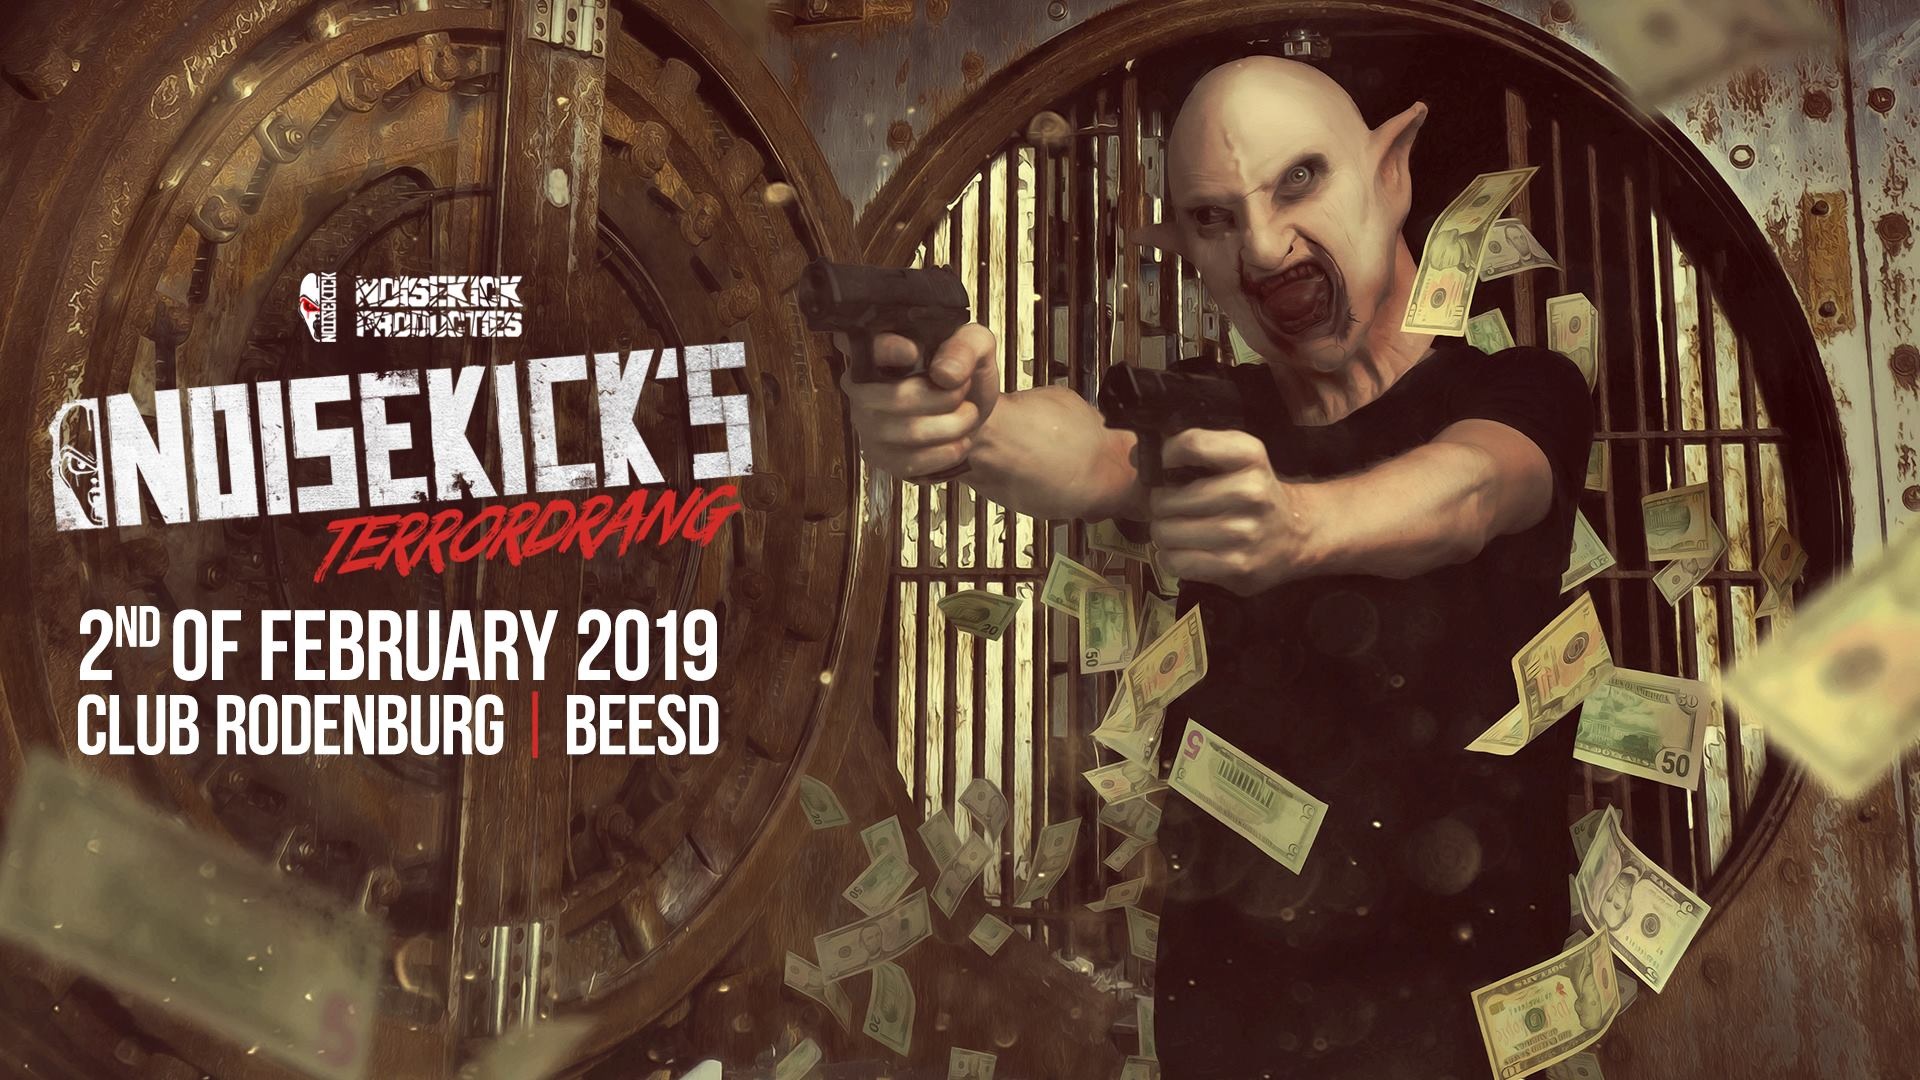 Noisekick Terrordrang 2019